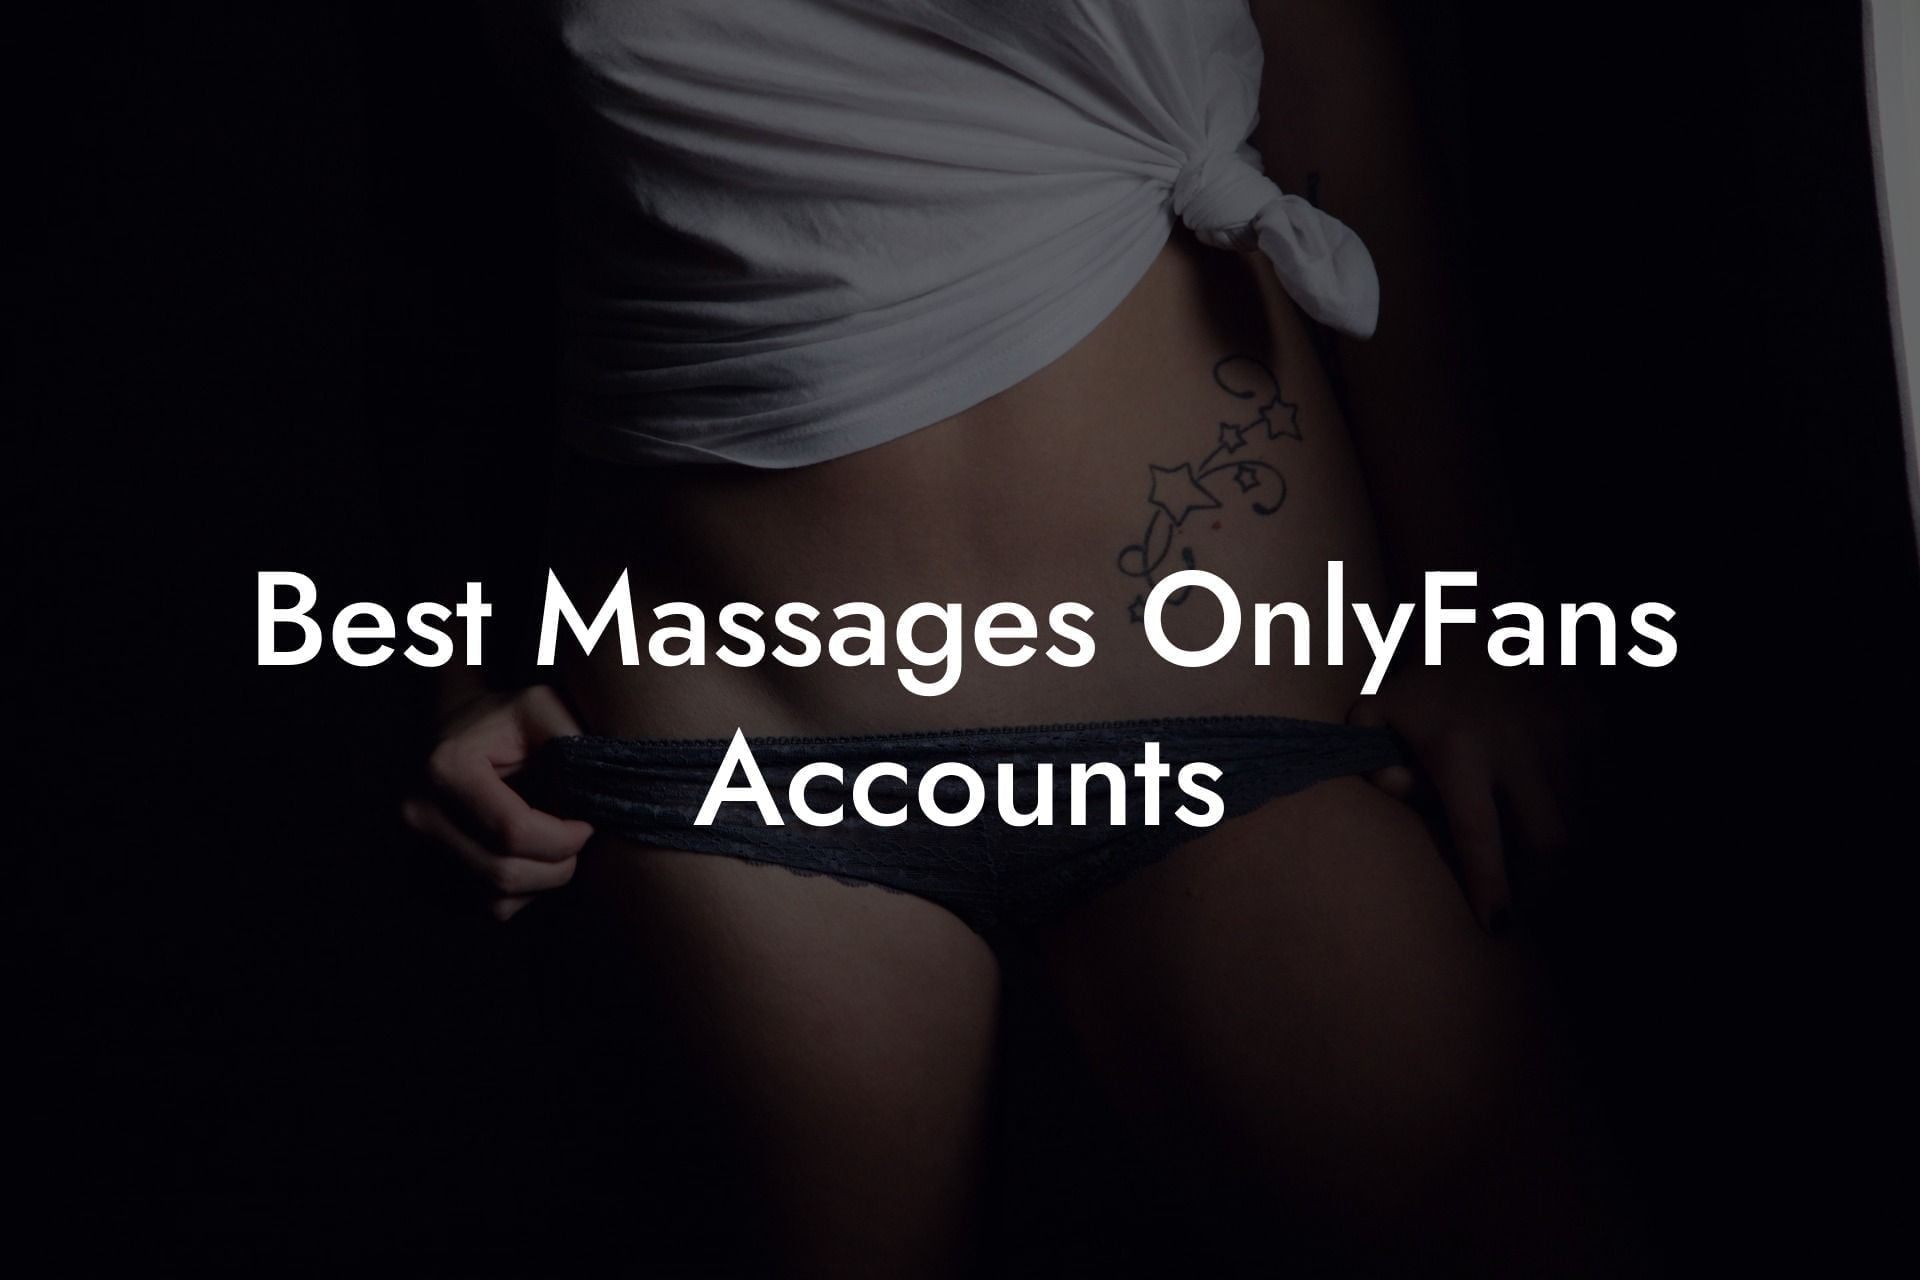 Best Massages OnlyFans Accounts